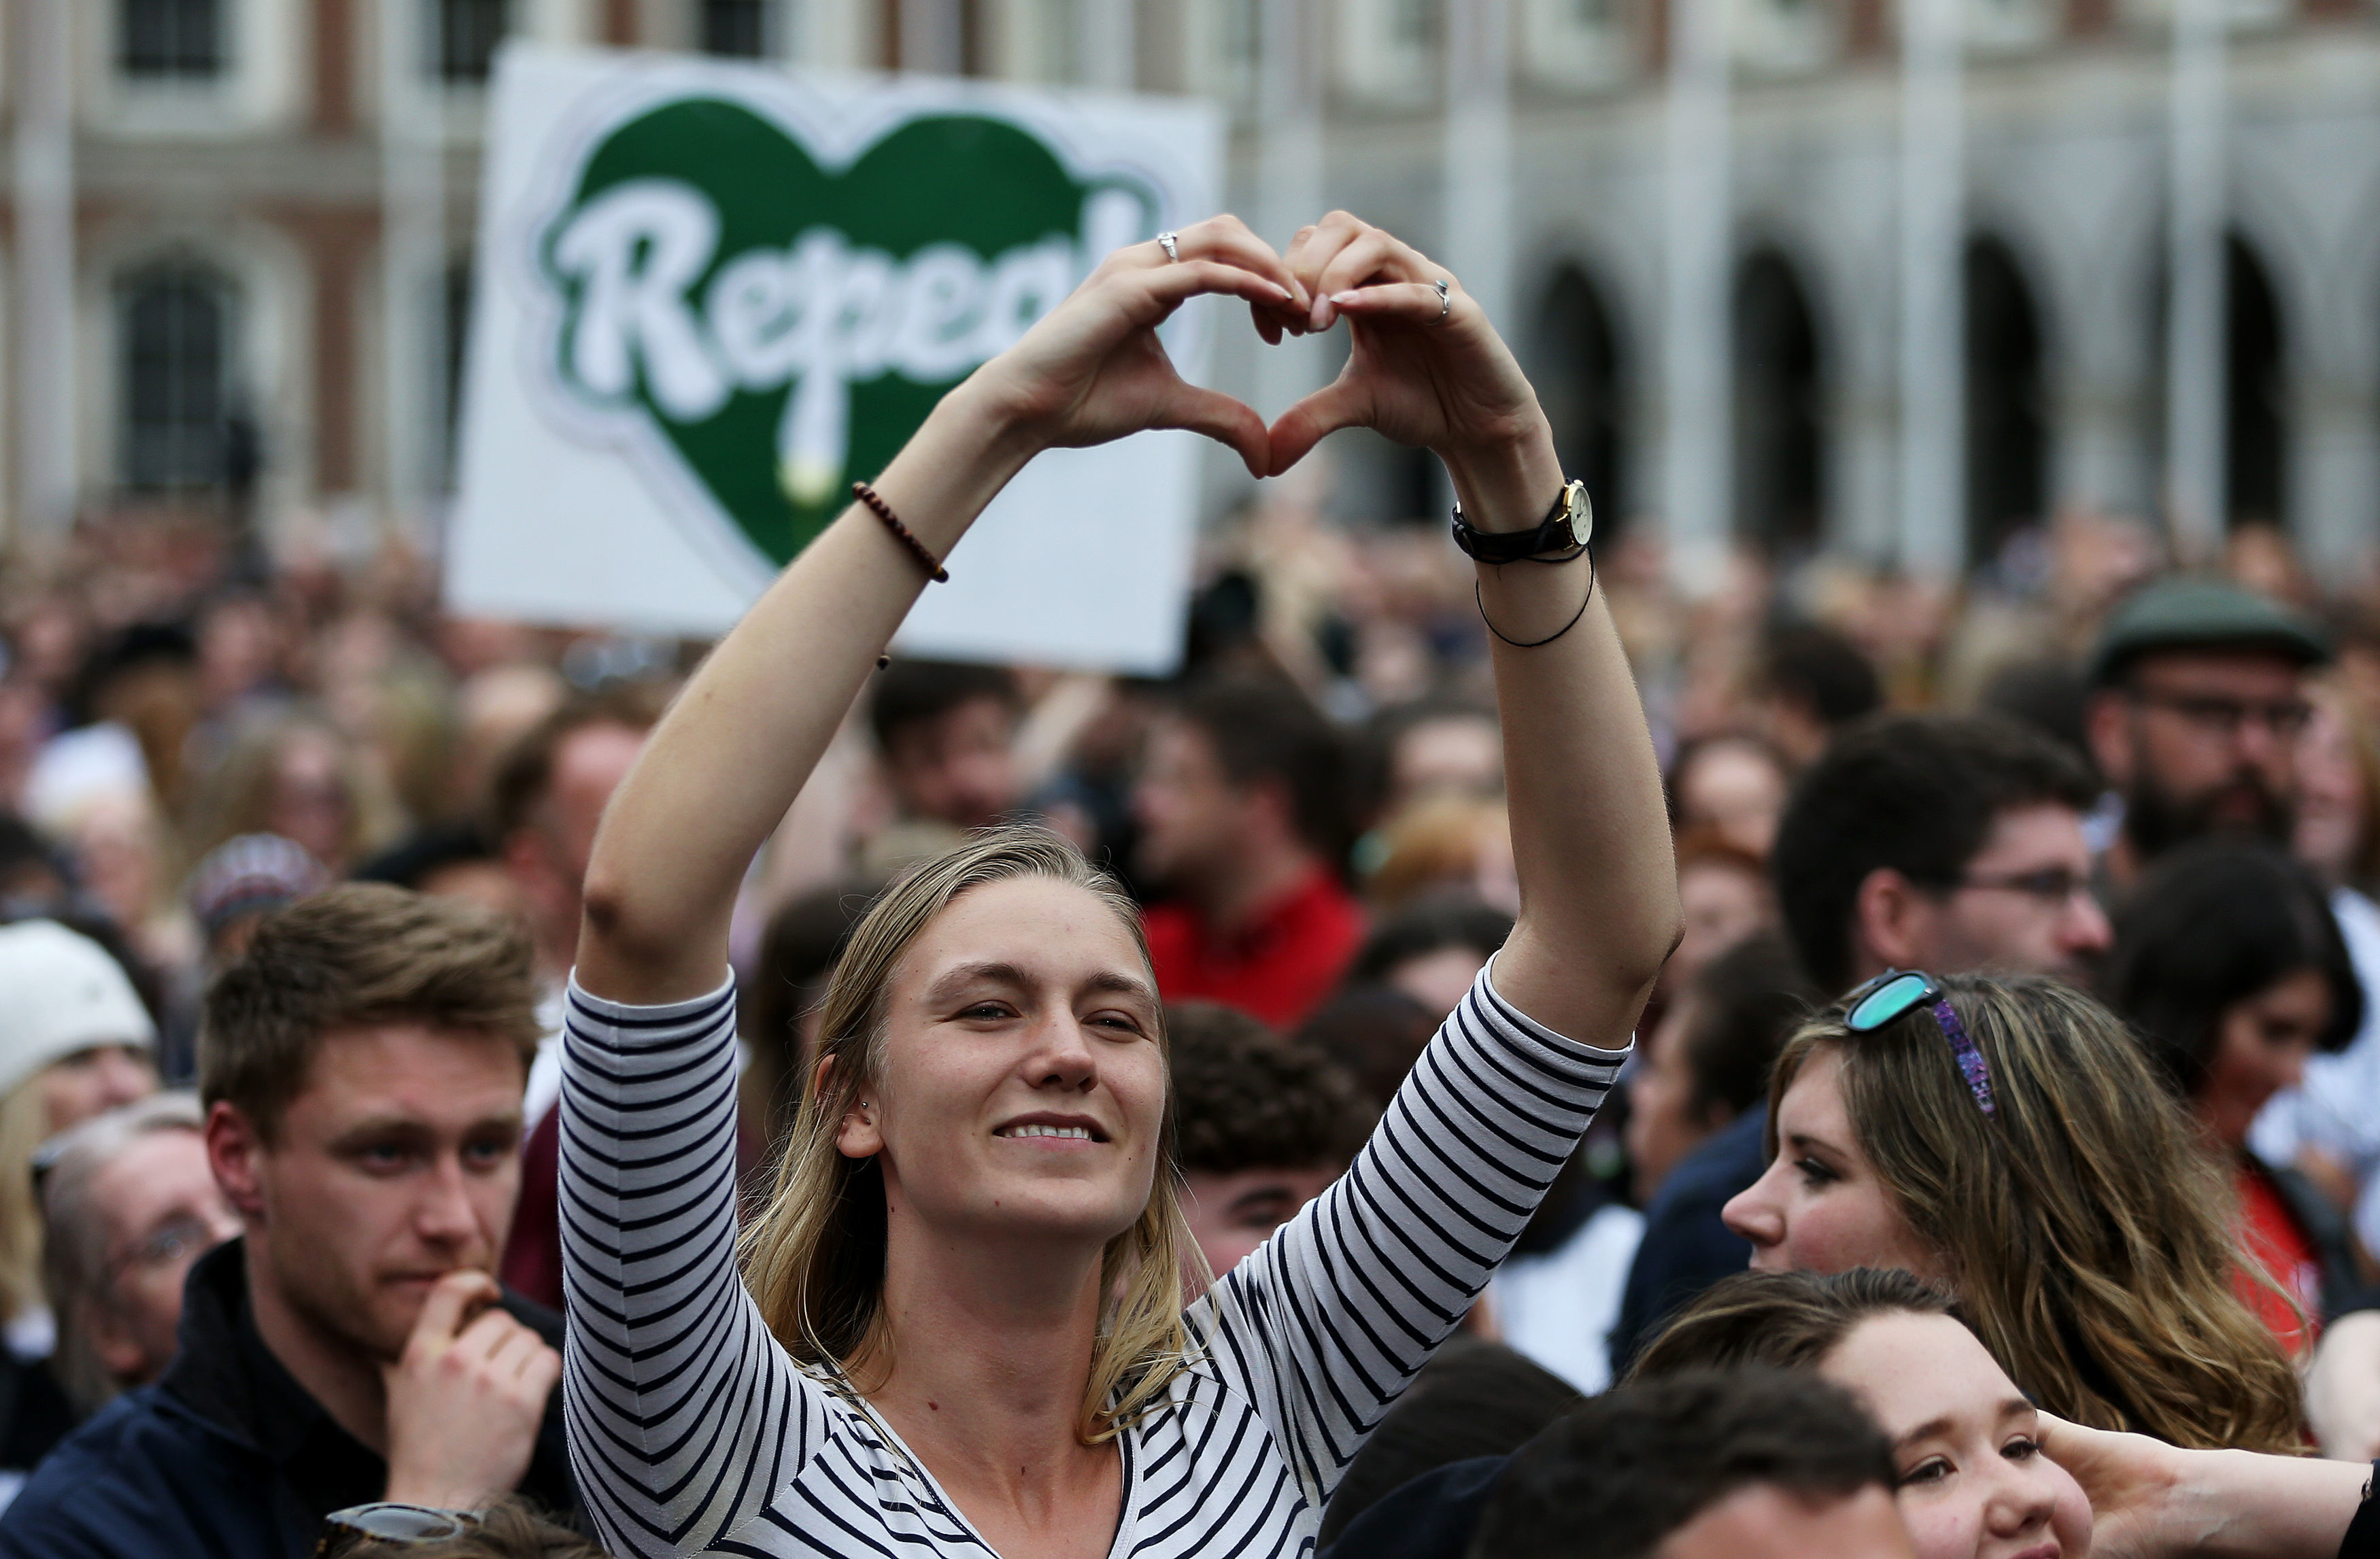 Irish bishop hopes papal visit can help bring healing after abortion vote